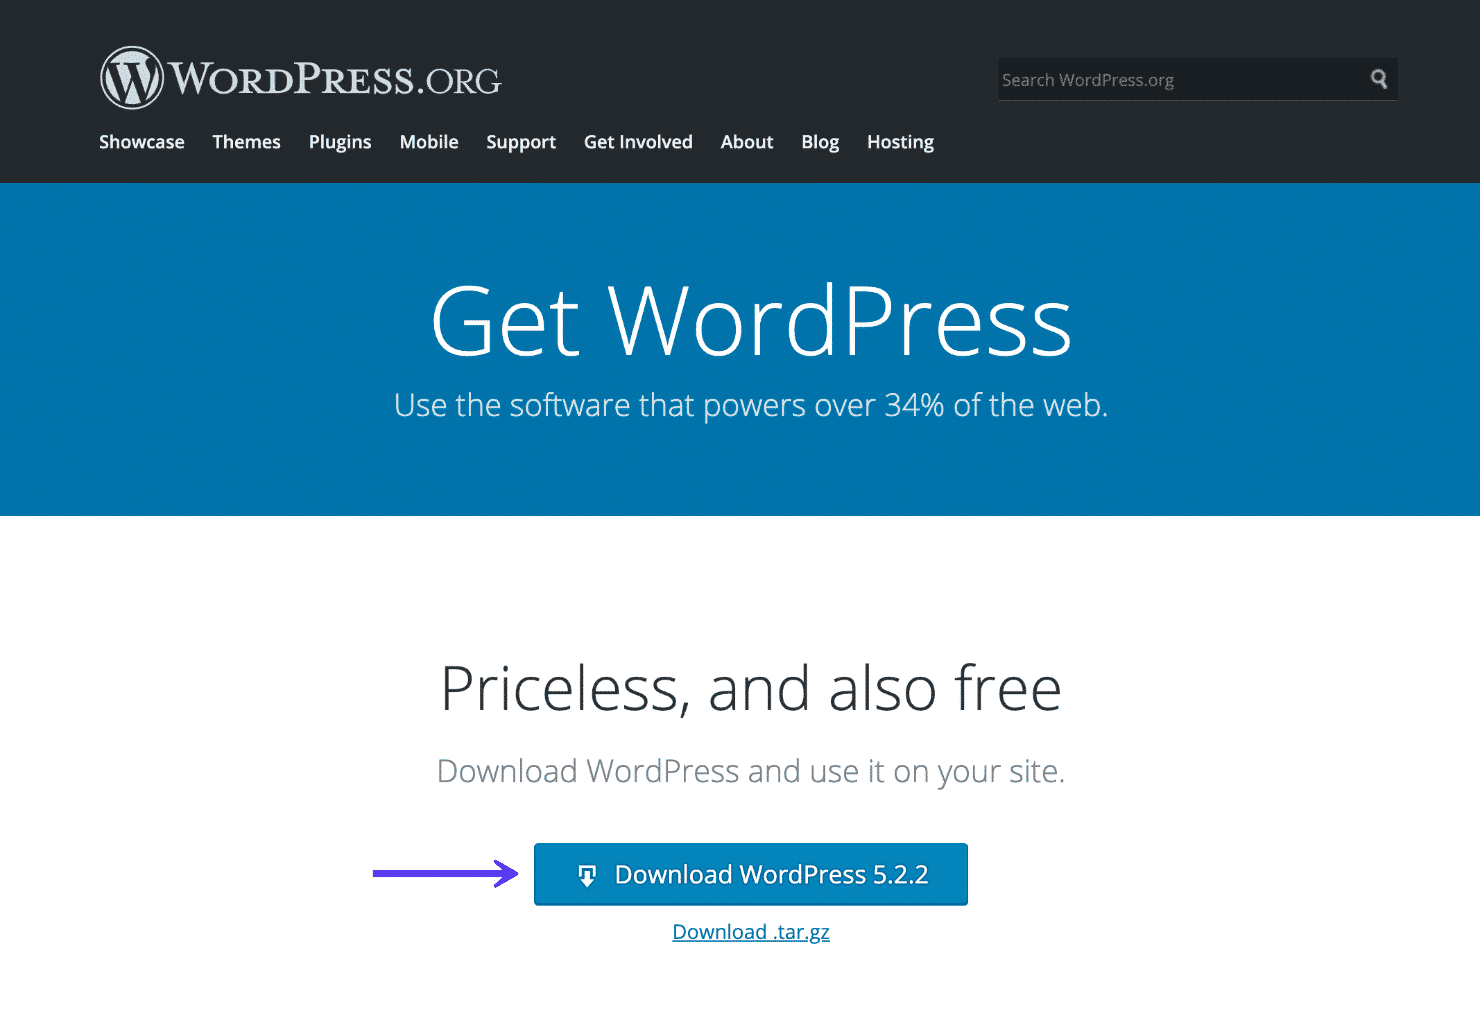 WordPress download page.